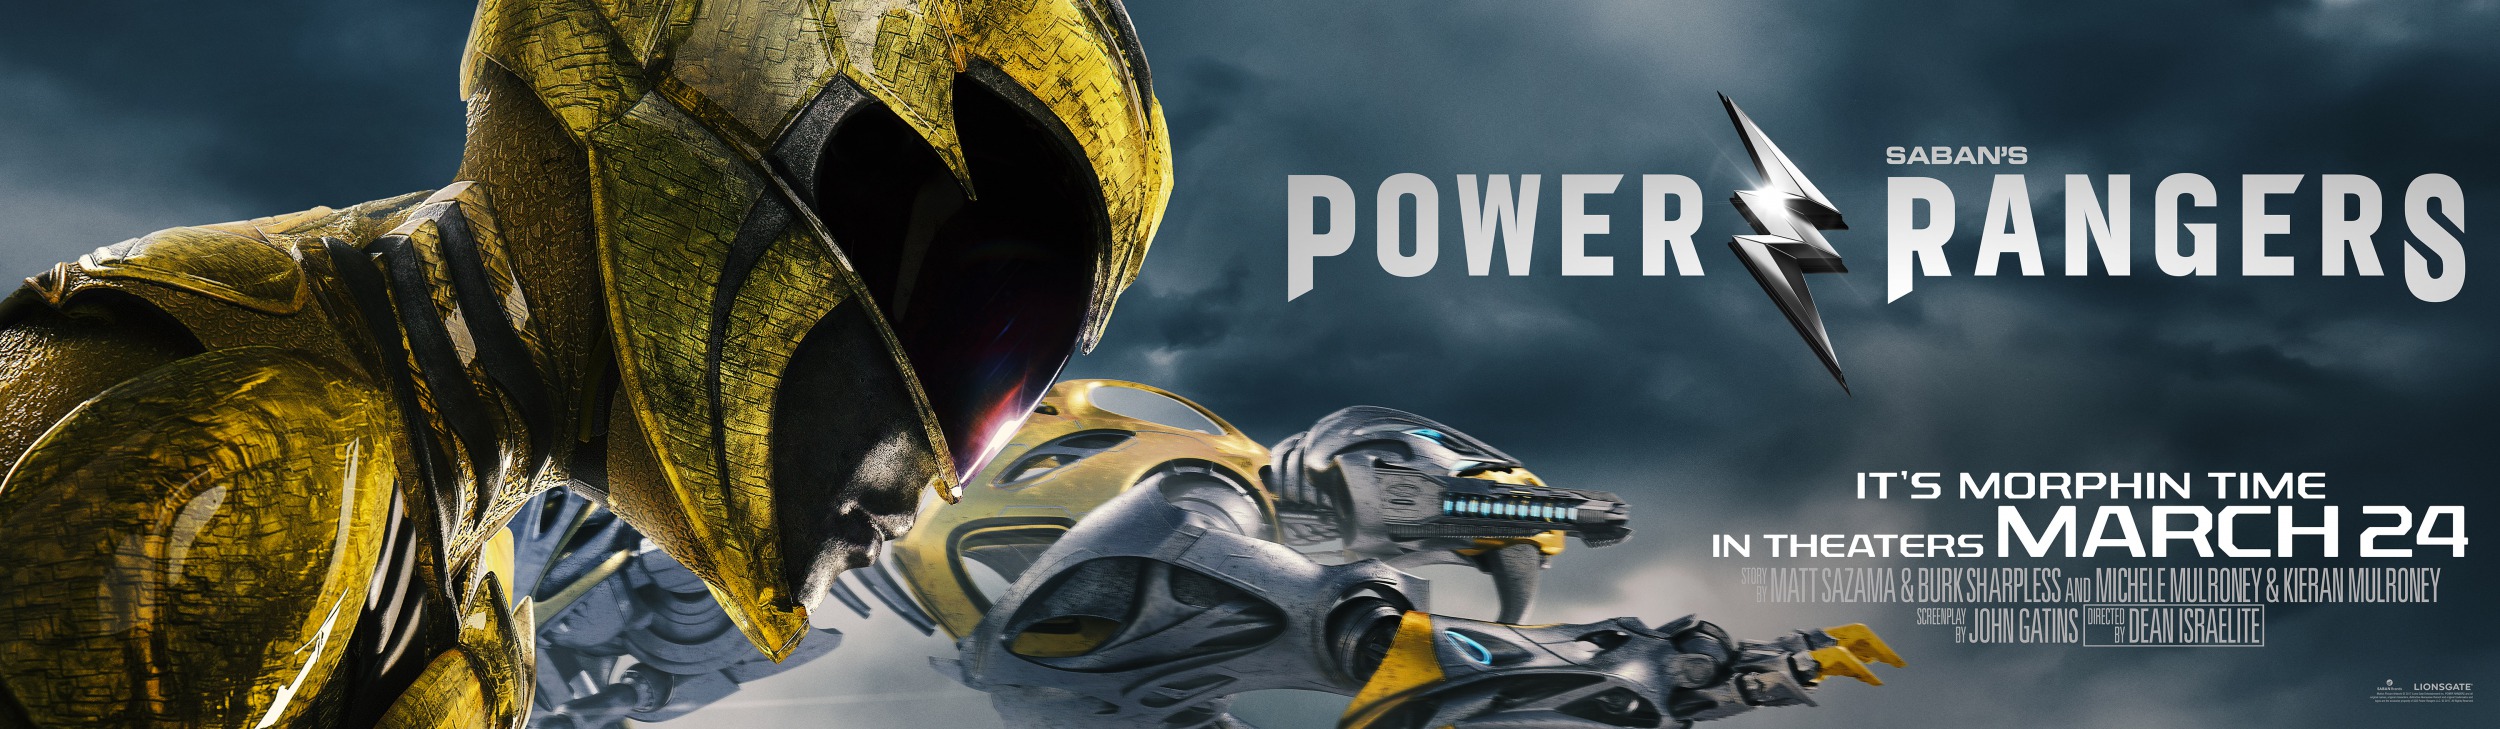 Mega Sized Movie Poster Image for Power Rangers (#35 of 50)